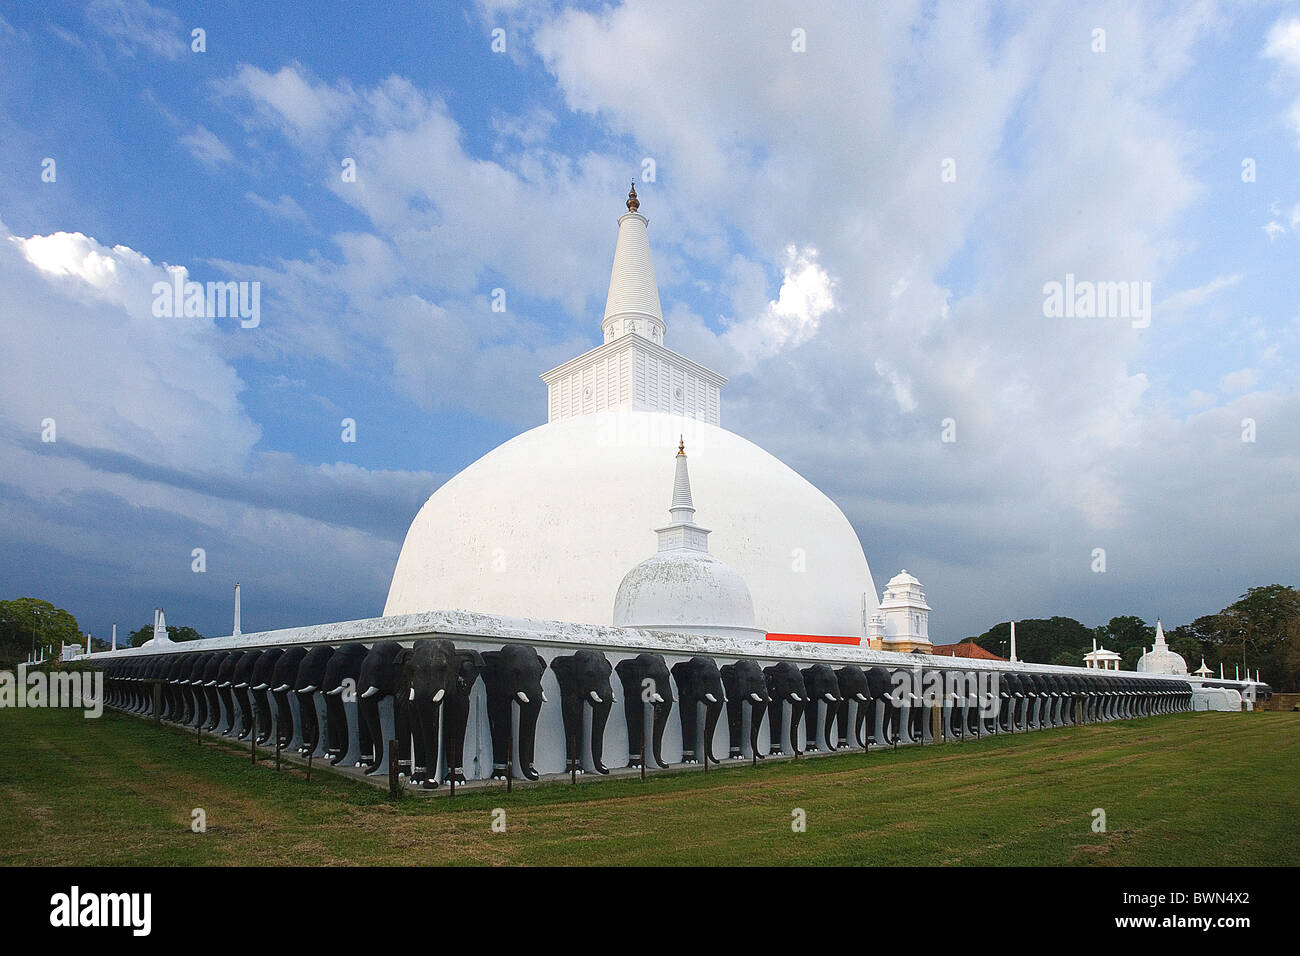 Asie Sri Lanka Anuradhapura villes anciennes site du patrimoine mondial de l'Dagoba Ruvanvelisaya bouddhisme Stupa cul Banque D'Images